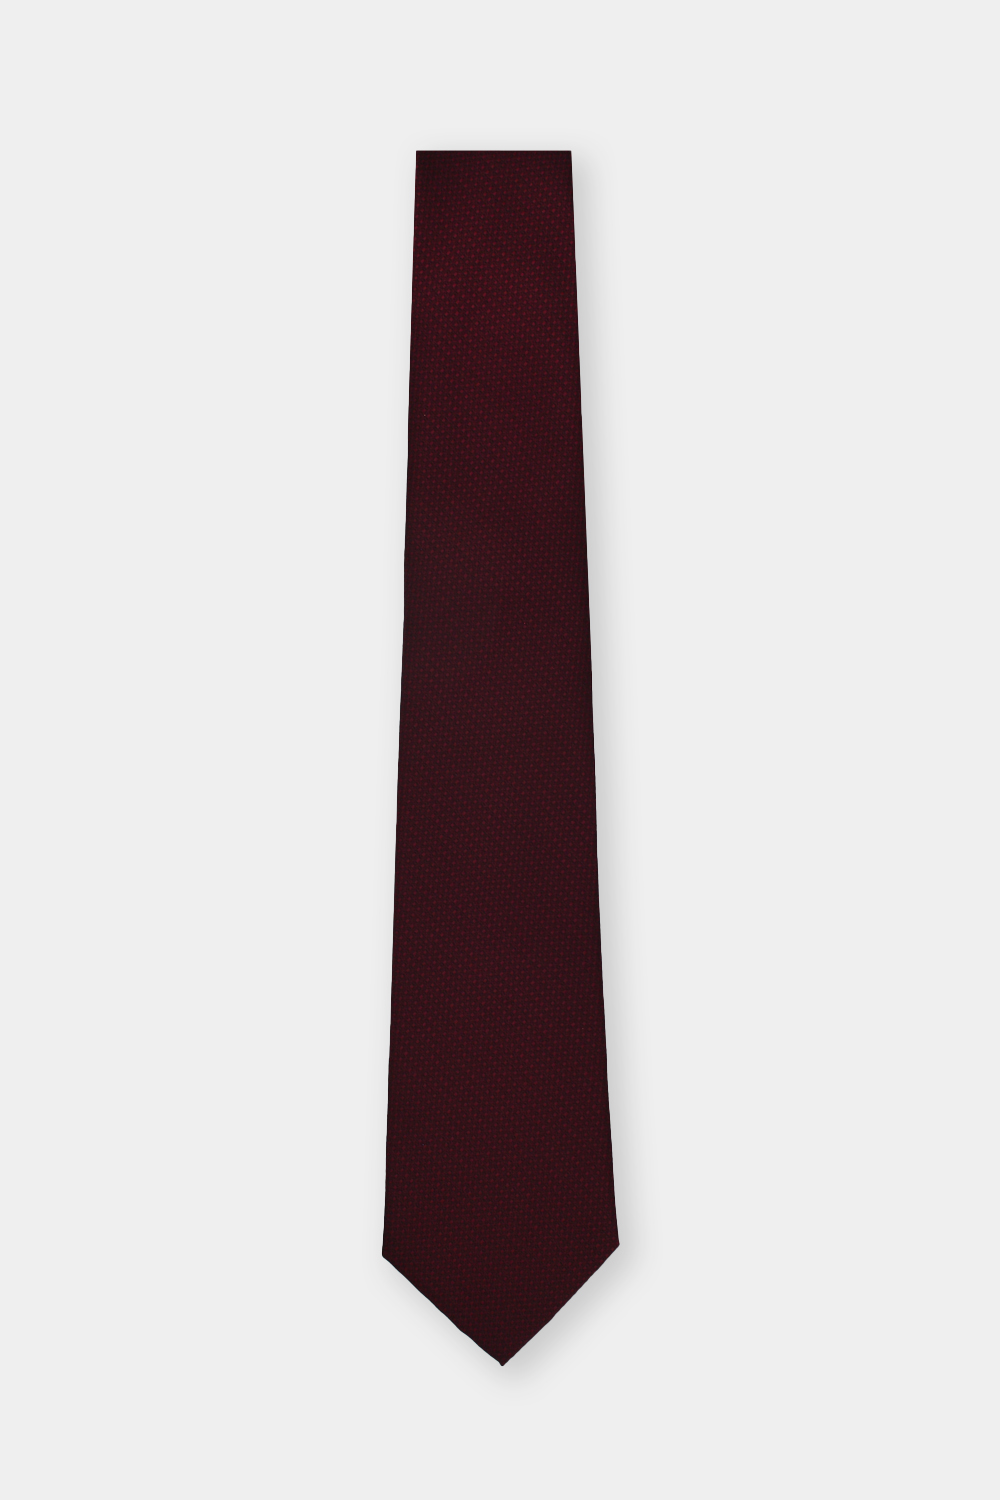 Jacquard Tie 7.5 cm Maroon - TIE HOUSE